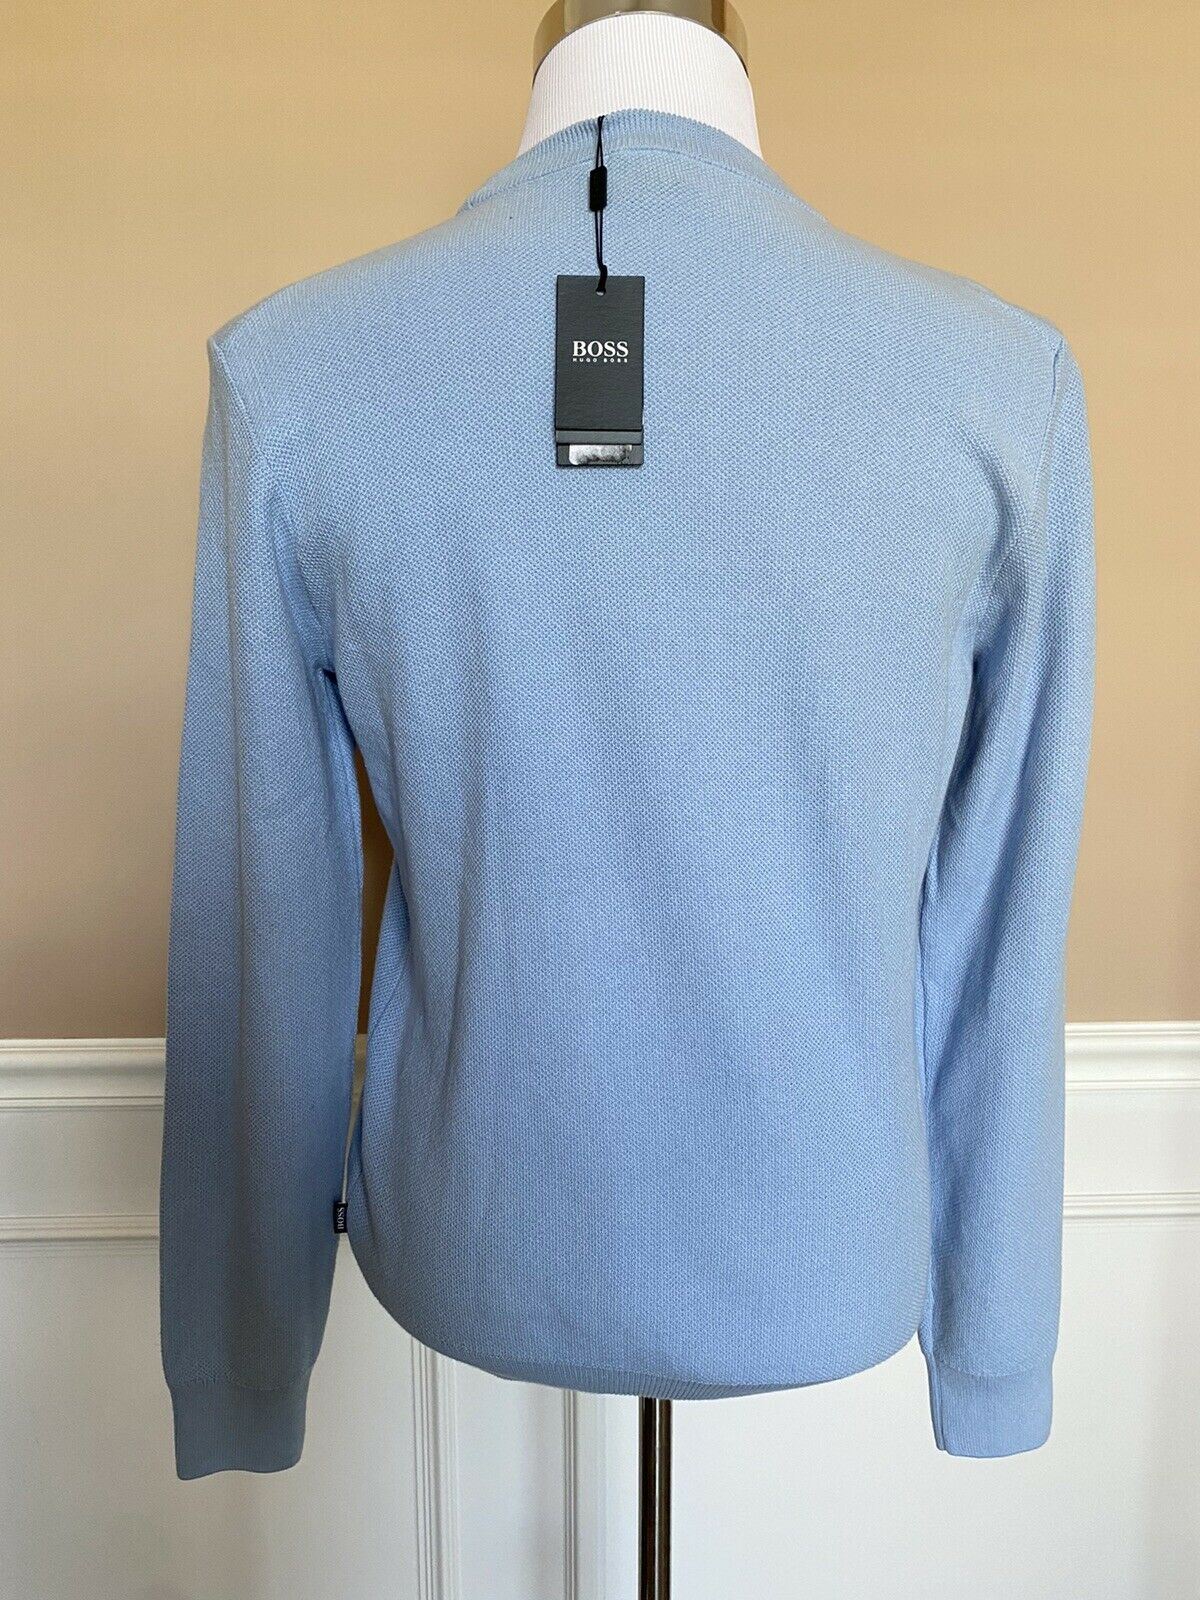 NWT $178 BOSS Hugo Boss Men's Crewneck Light Blue Sweater Medium